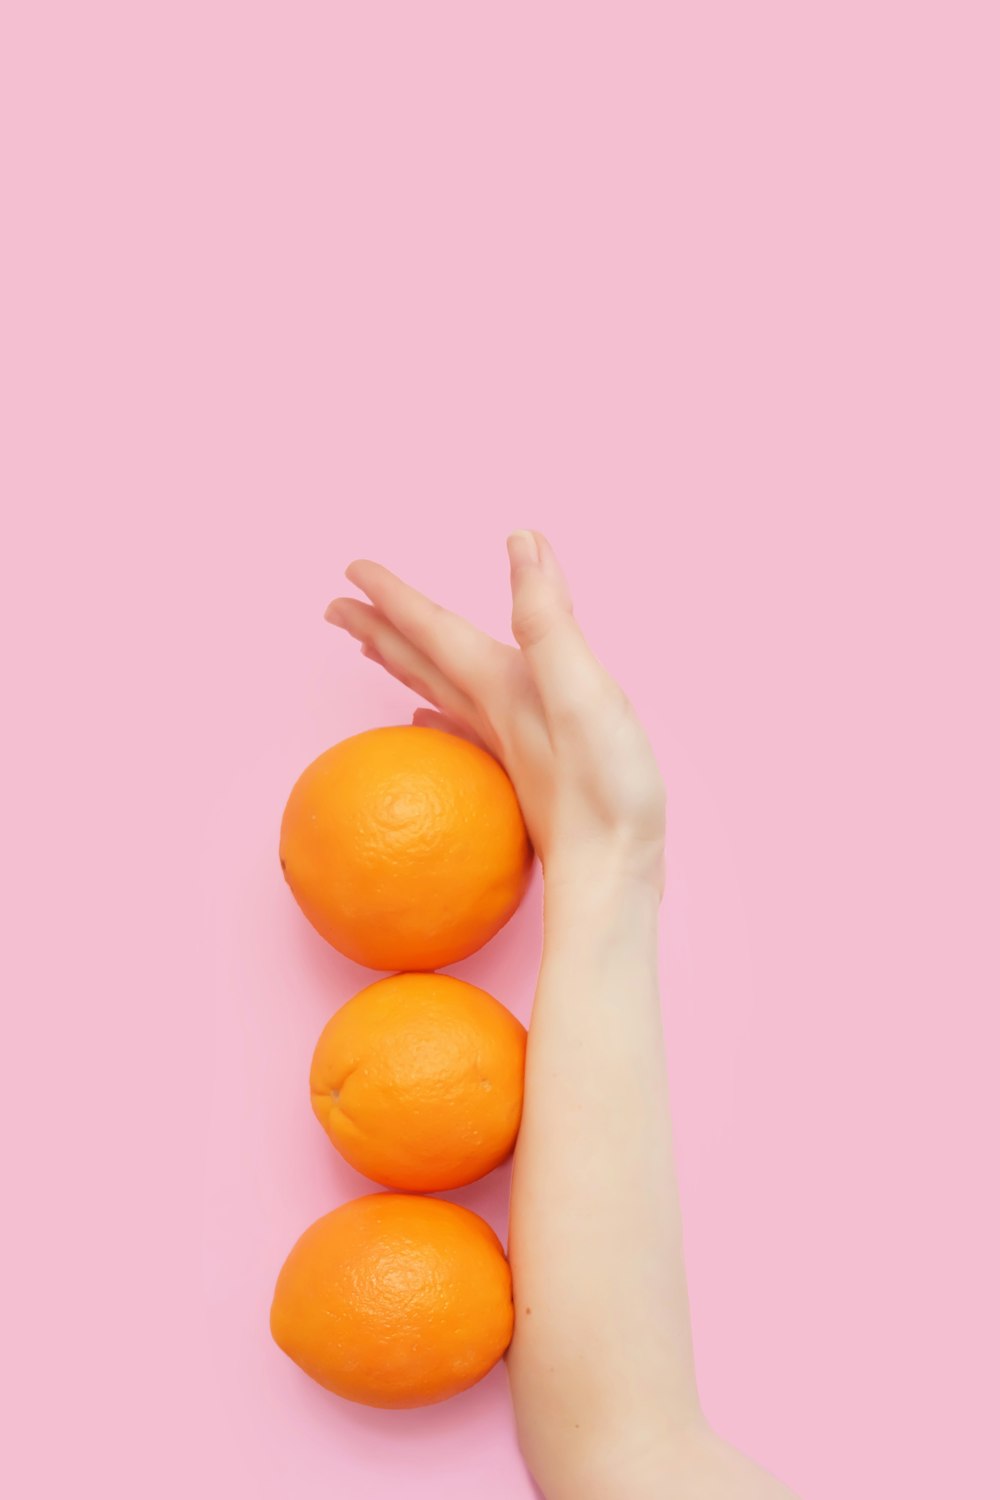 three round orange fruits